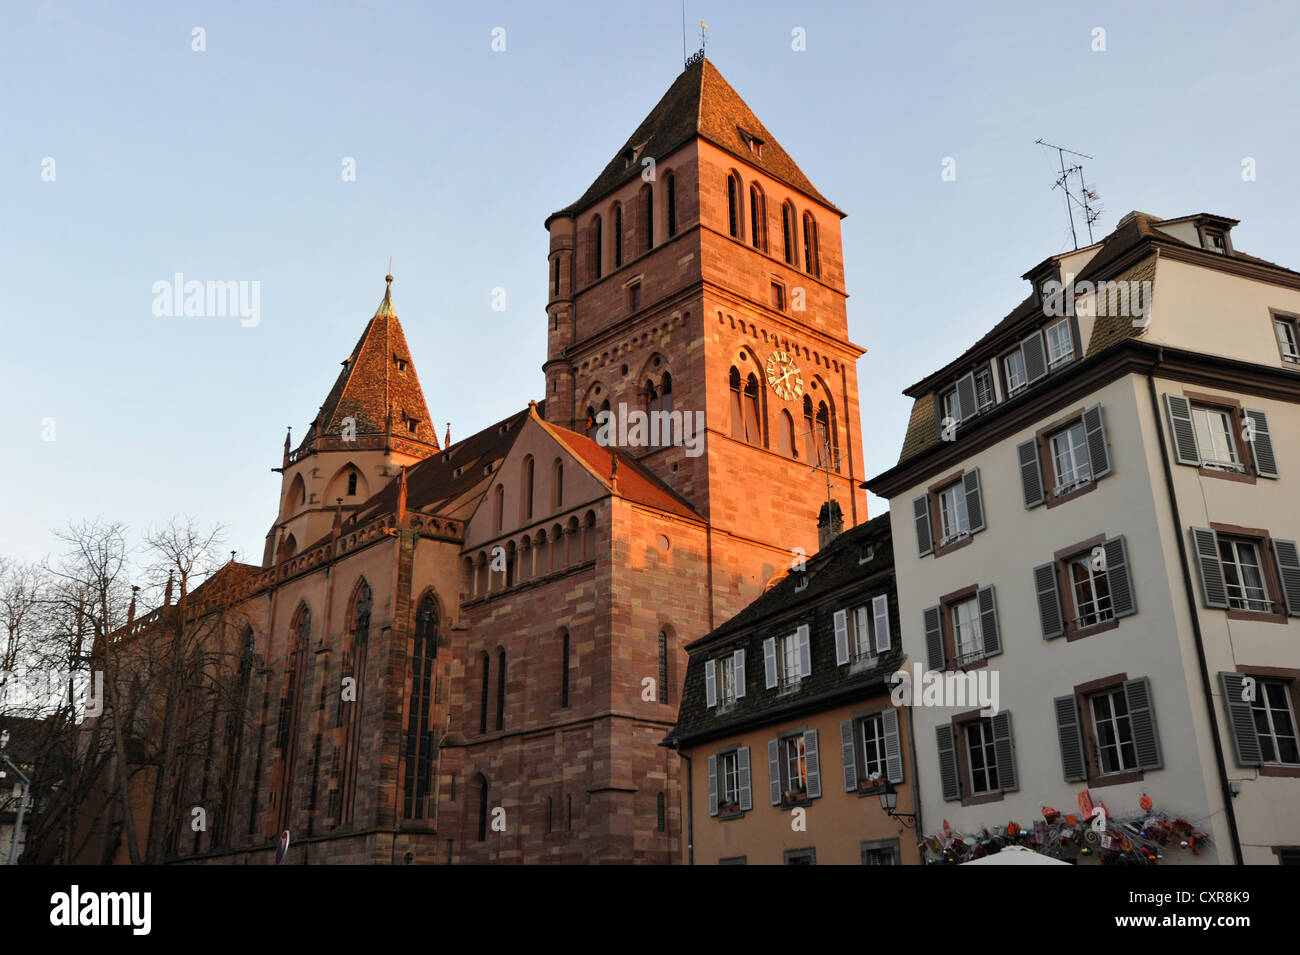 Northern facade, St Thomas's Church, Église Saint-Thomas church, Strasbourg, Bas-Rhin département, Alsace, France, Europe Stock Photo